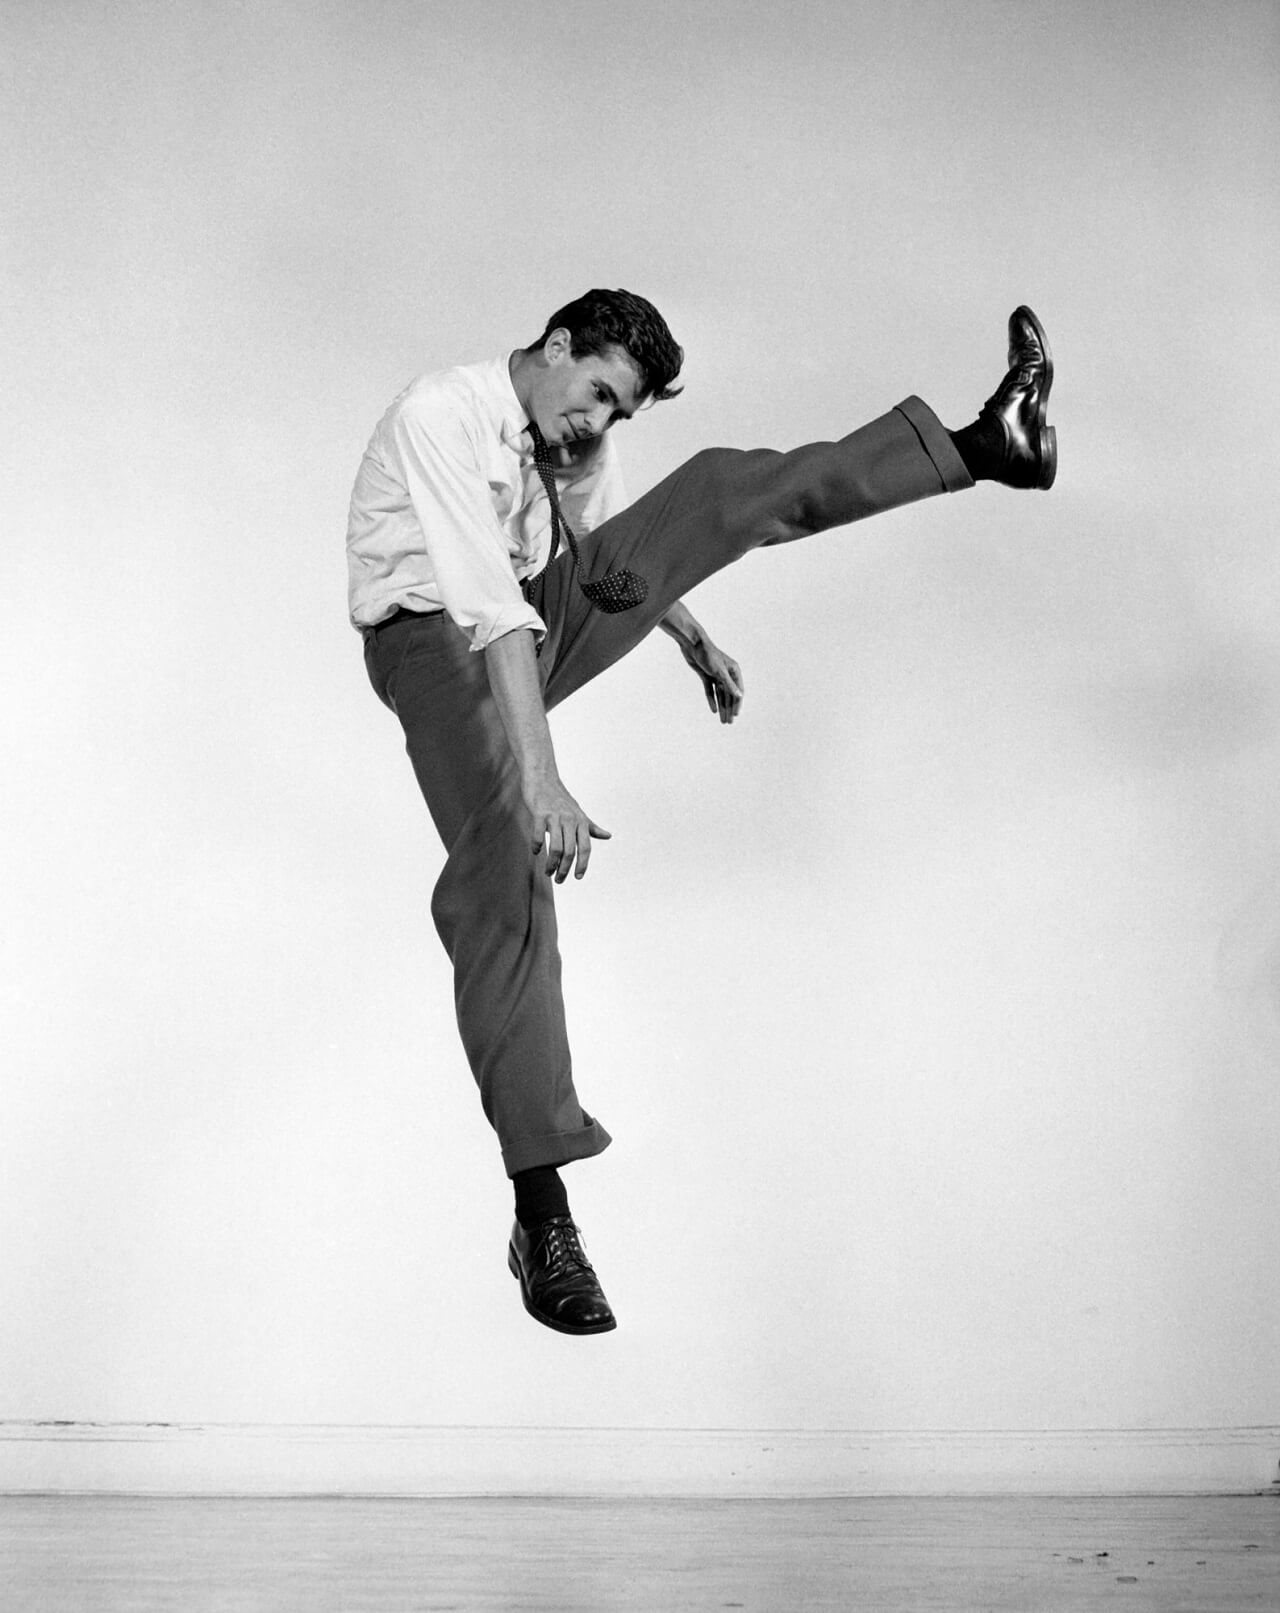 Anthony-perkins-jumping.jpg